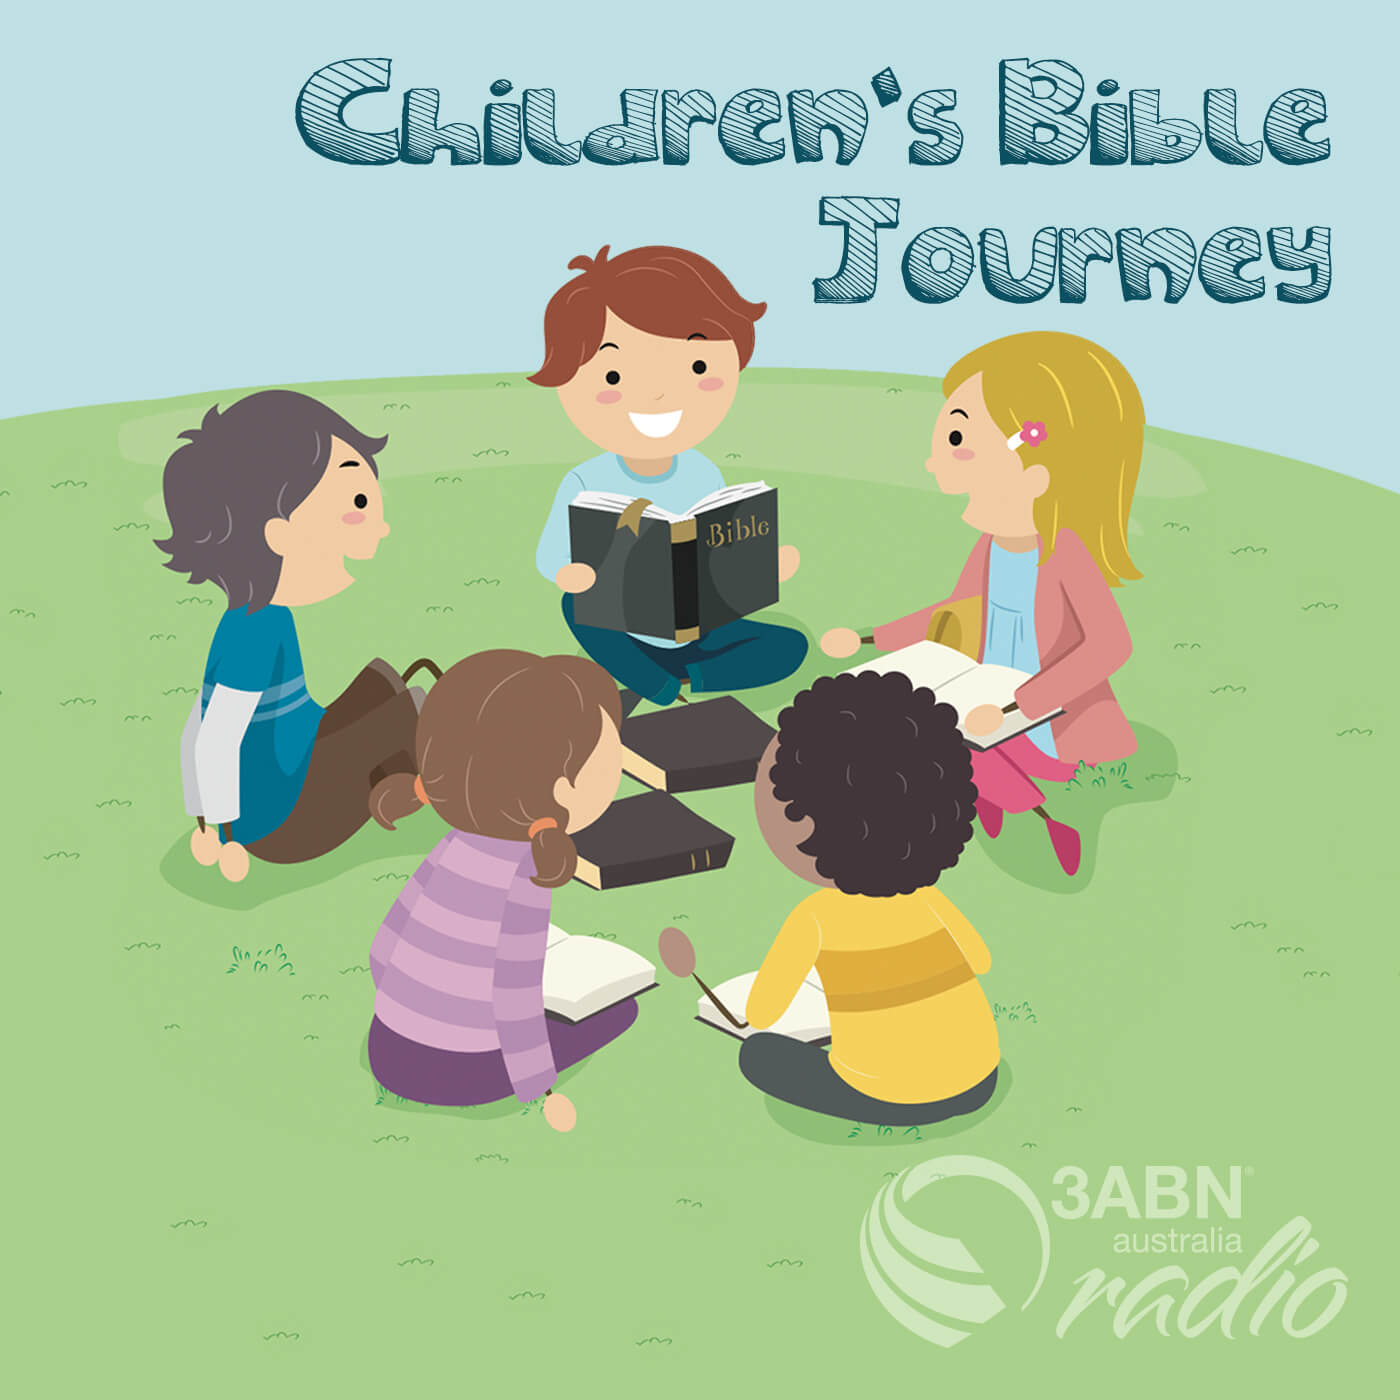 Children's Bible Journey - 2172